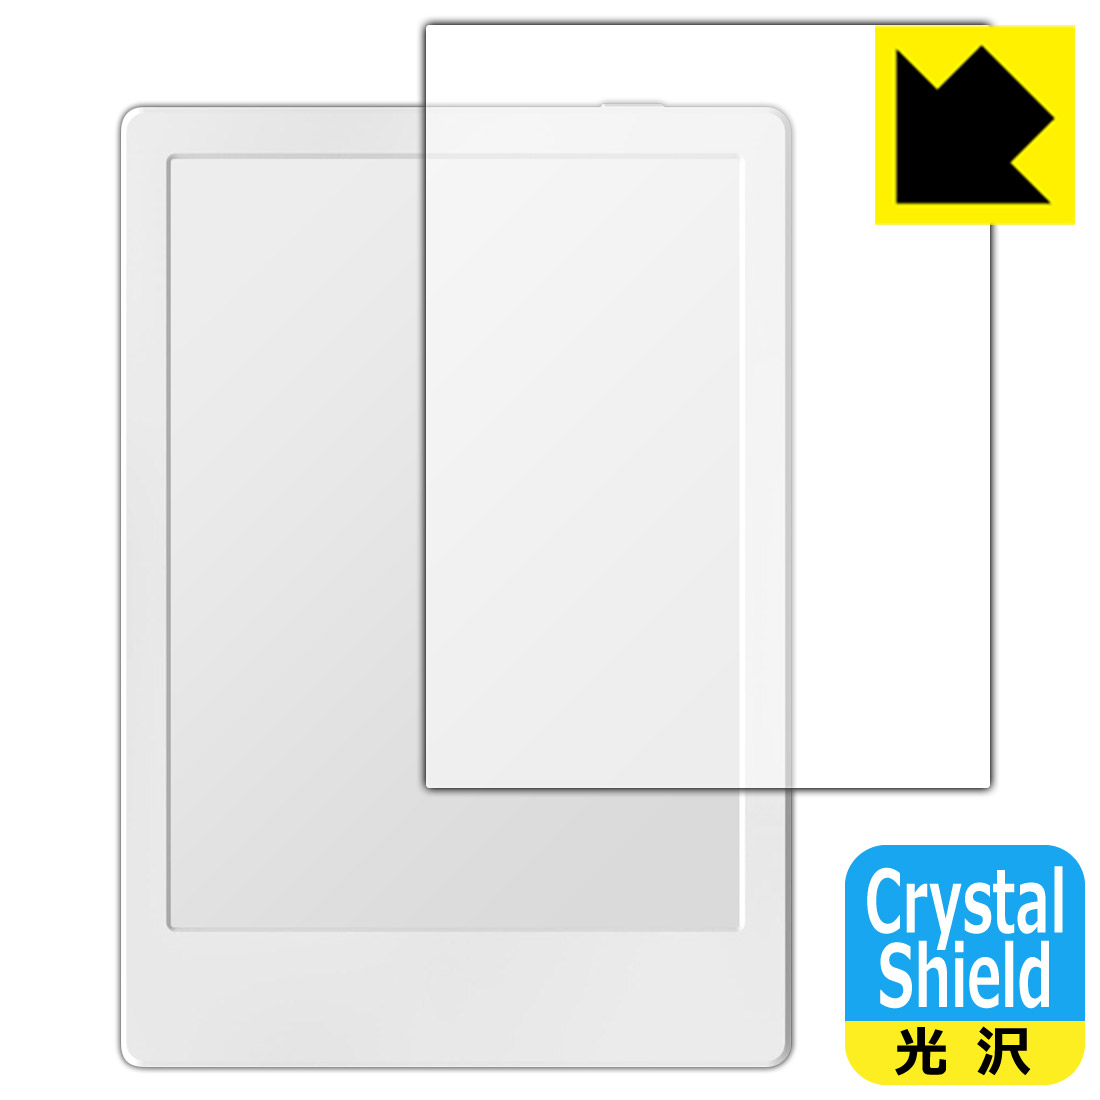 Crystal Shield【光沢】保護フィルム Onyx BOOX Poke4 Lite (3枚セット) 日本製 自社製造直販